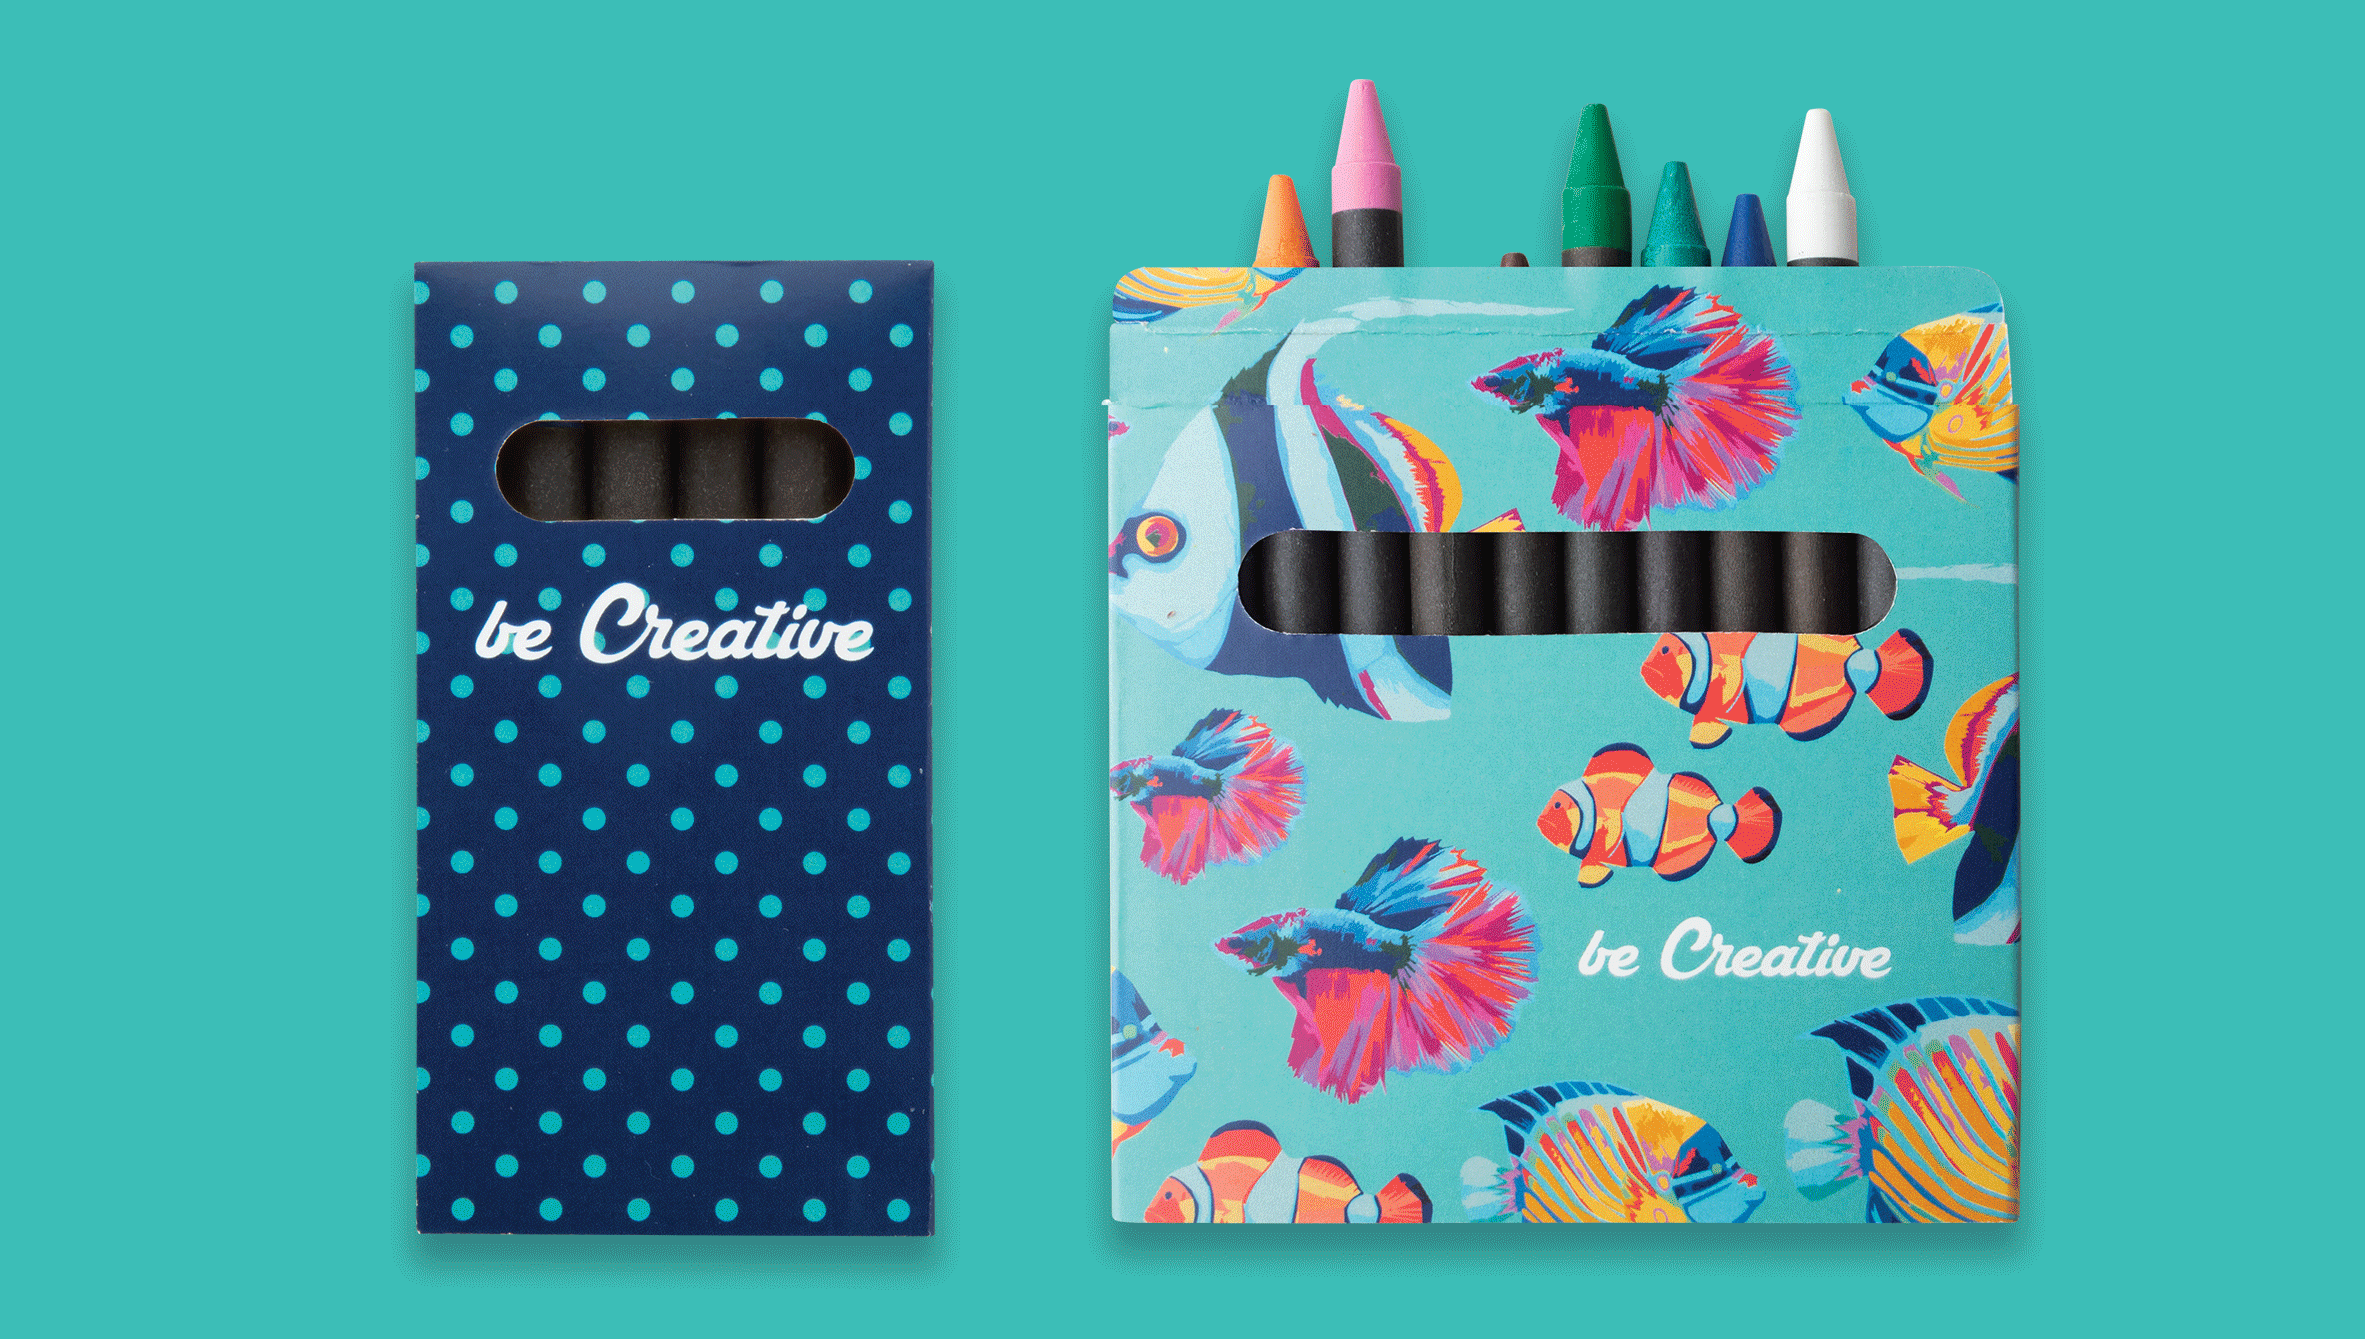 custom 6 pc crayon set